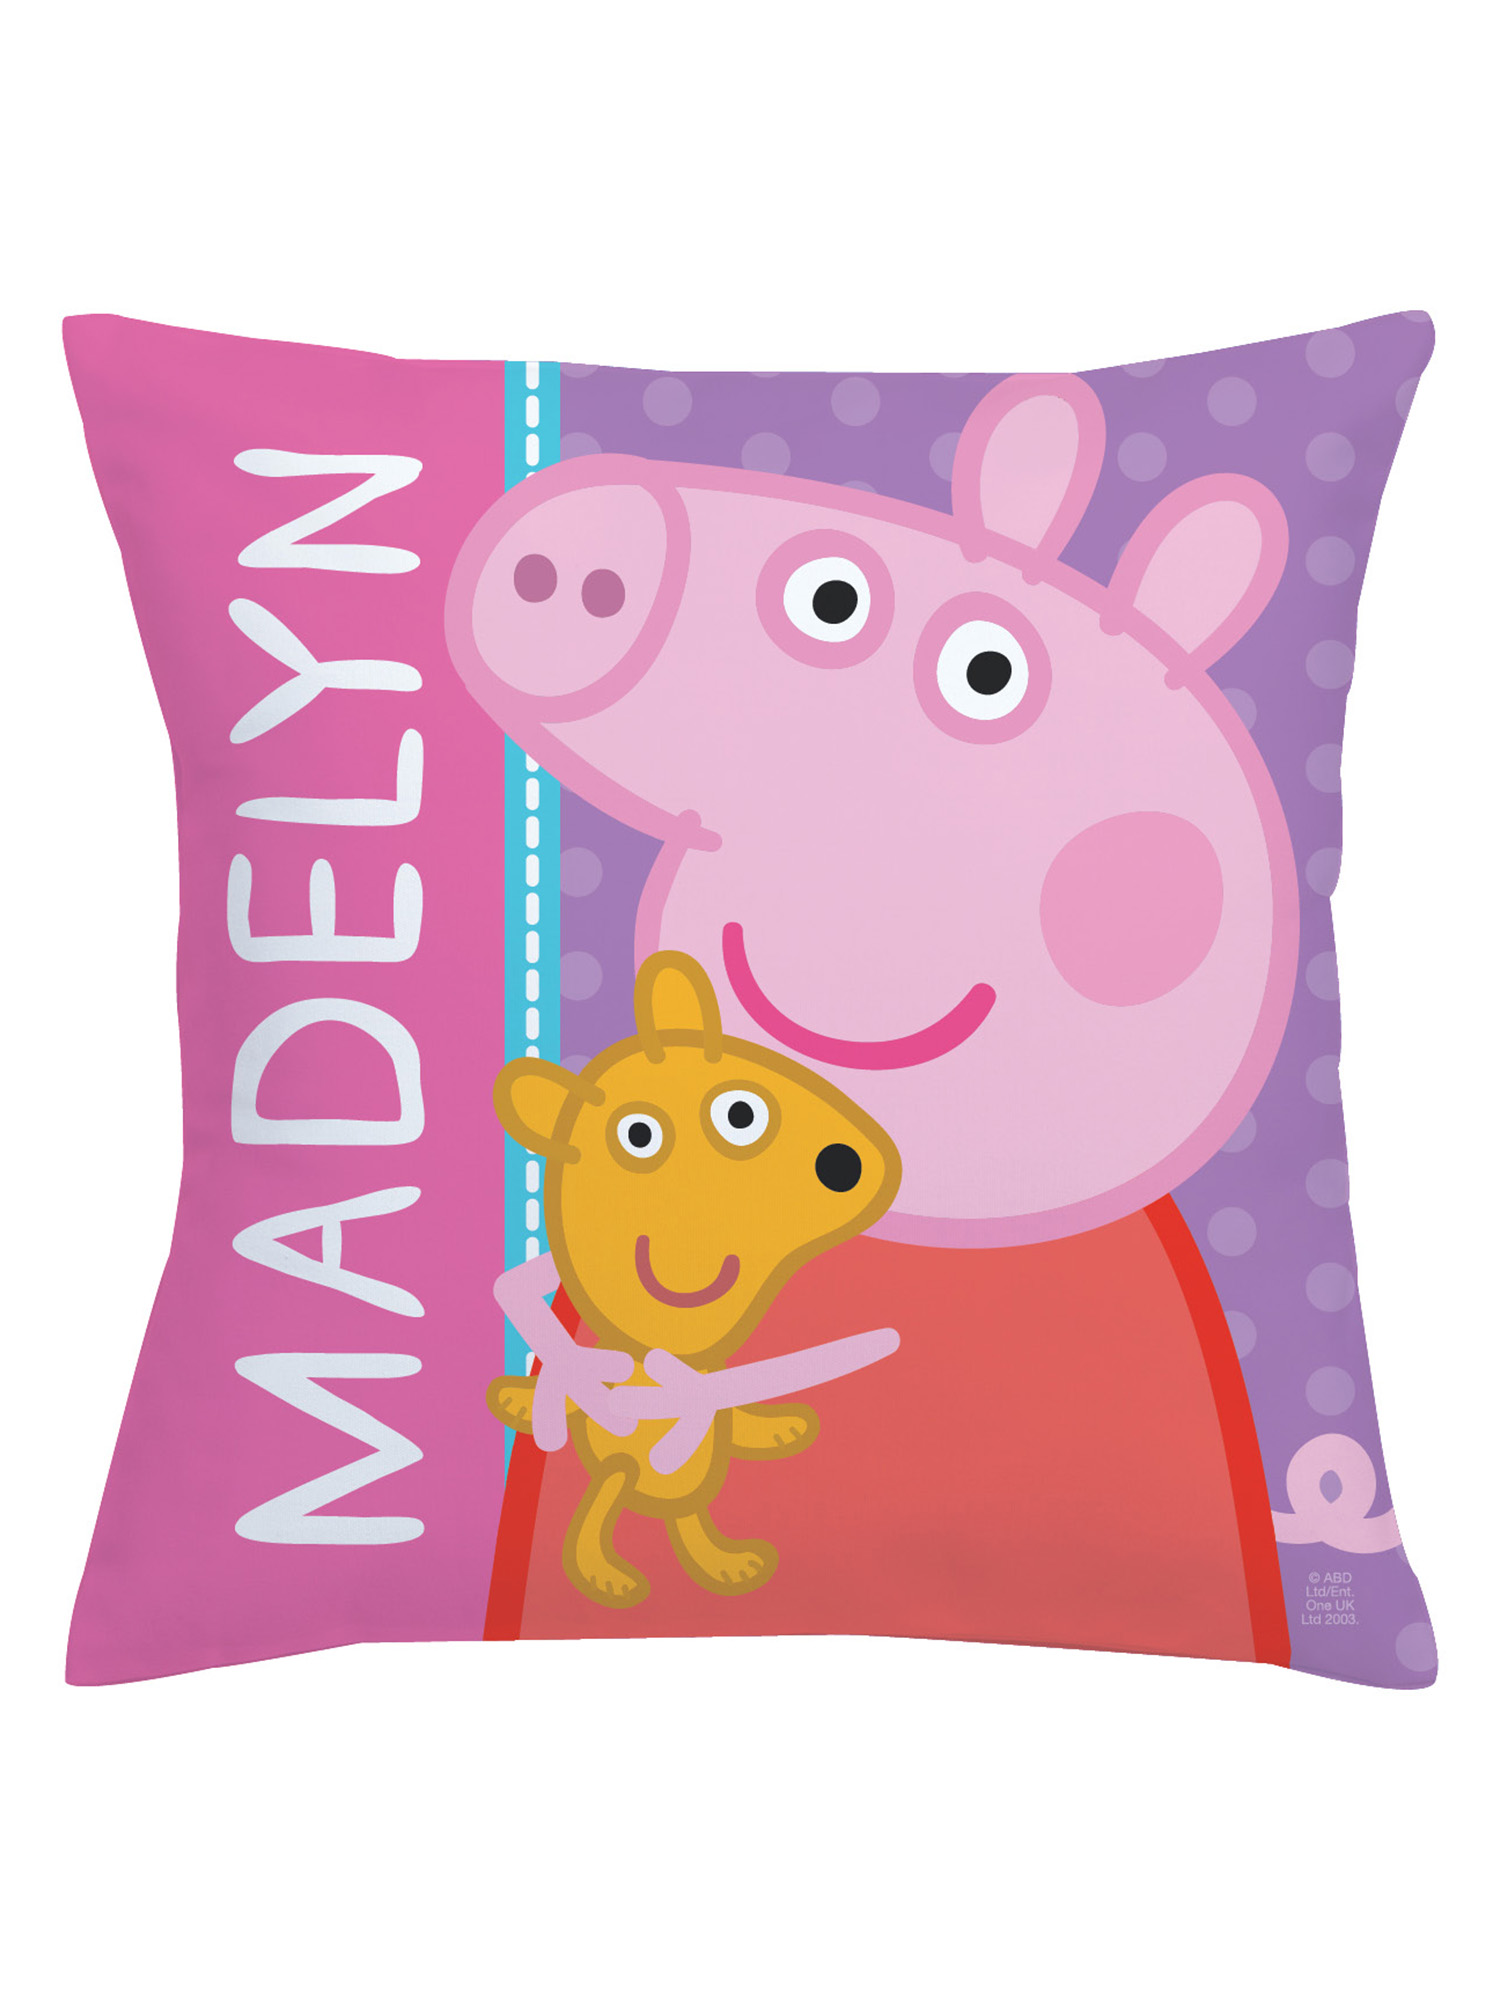 Personalized Peppa Pig Throw Pillow - Big Hug 14" x 14" - image 1 of 2